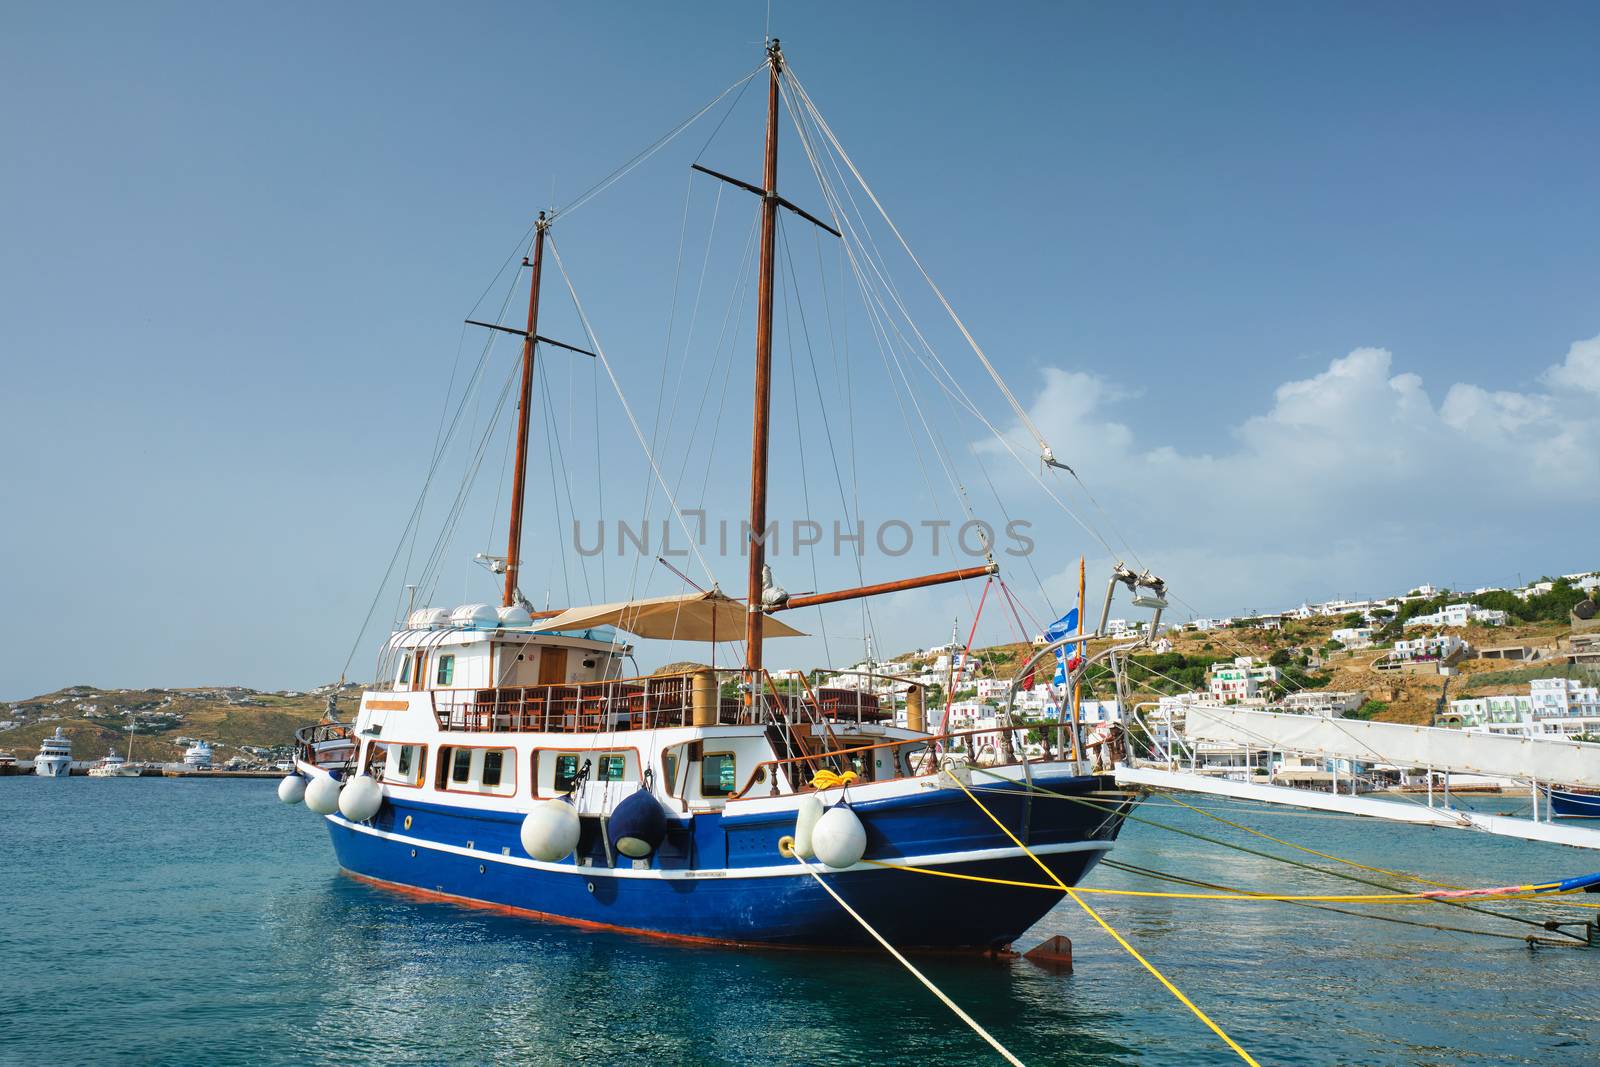 Vessel schooner moored in port harbor of Mykonos island, Greece by dimol